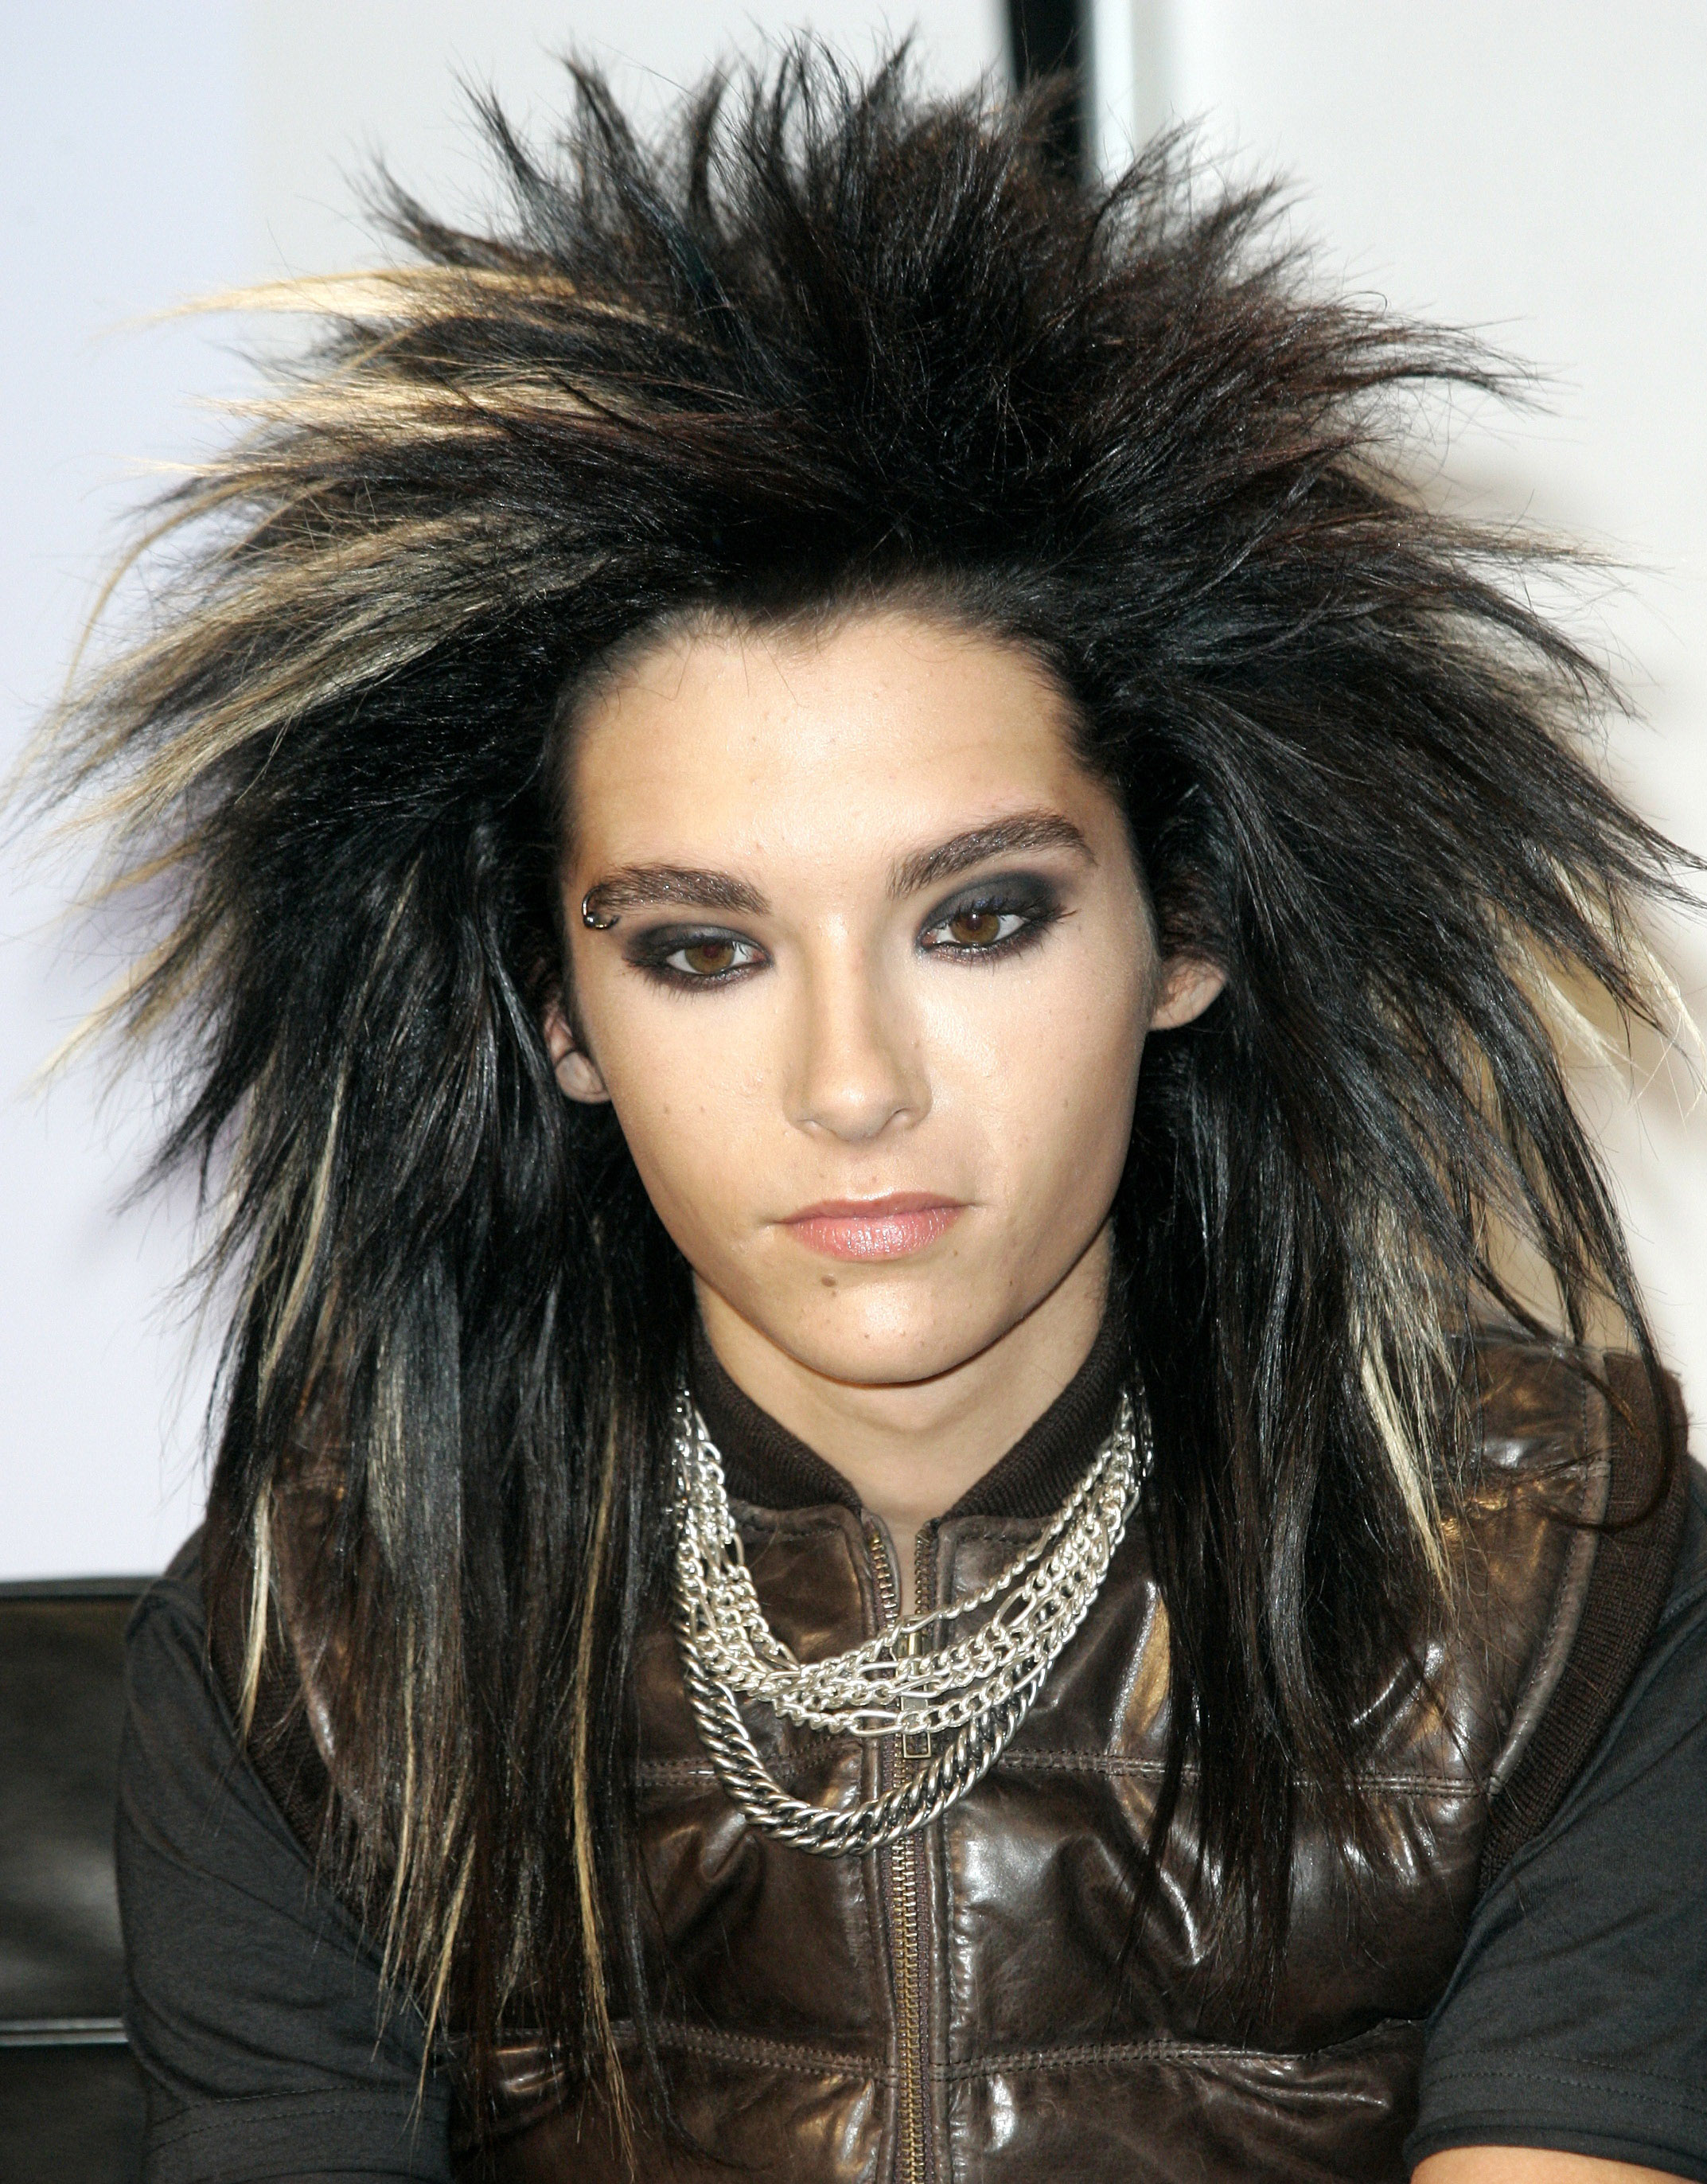 Tokio Hotel photo 809 of 2791 pics, wallpaper - photo #781639 - ThePlace2